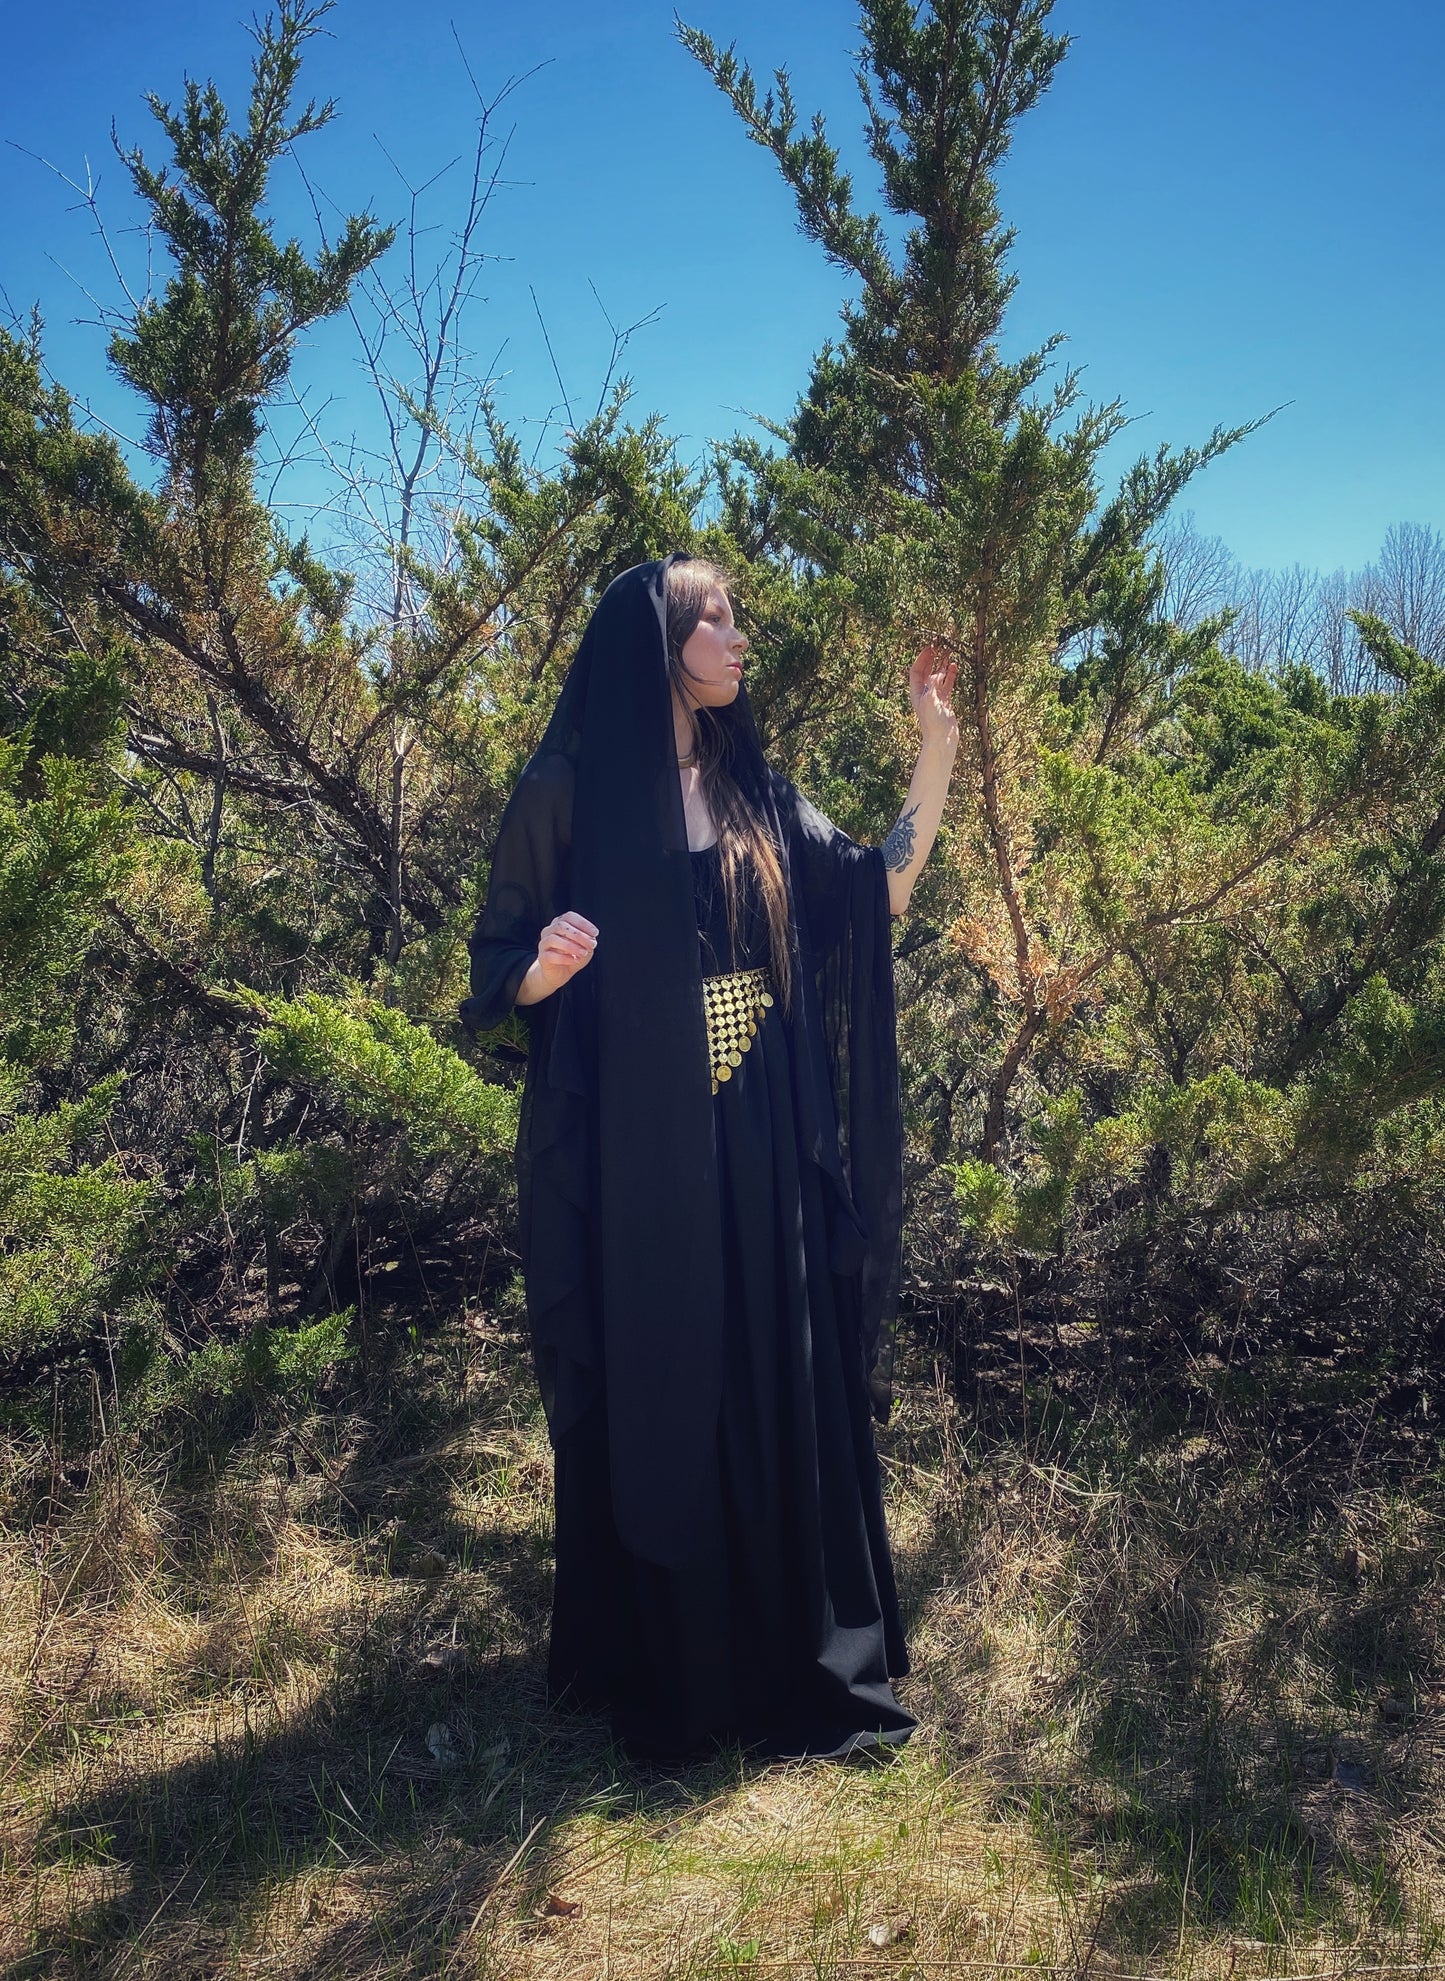 Priestess Veil